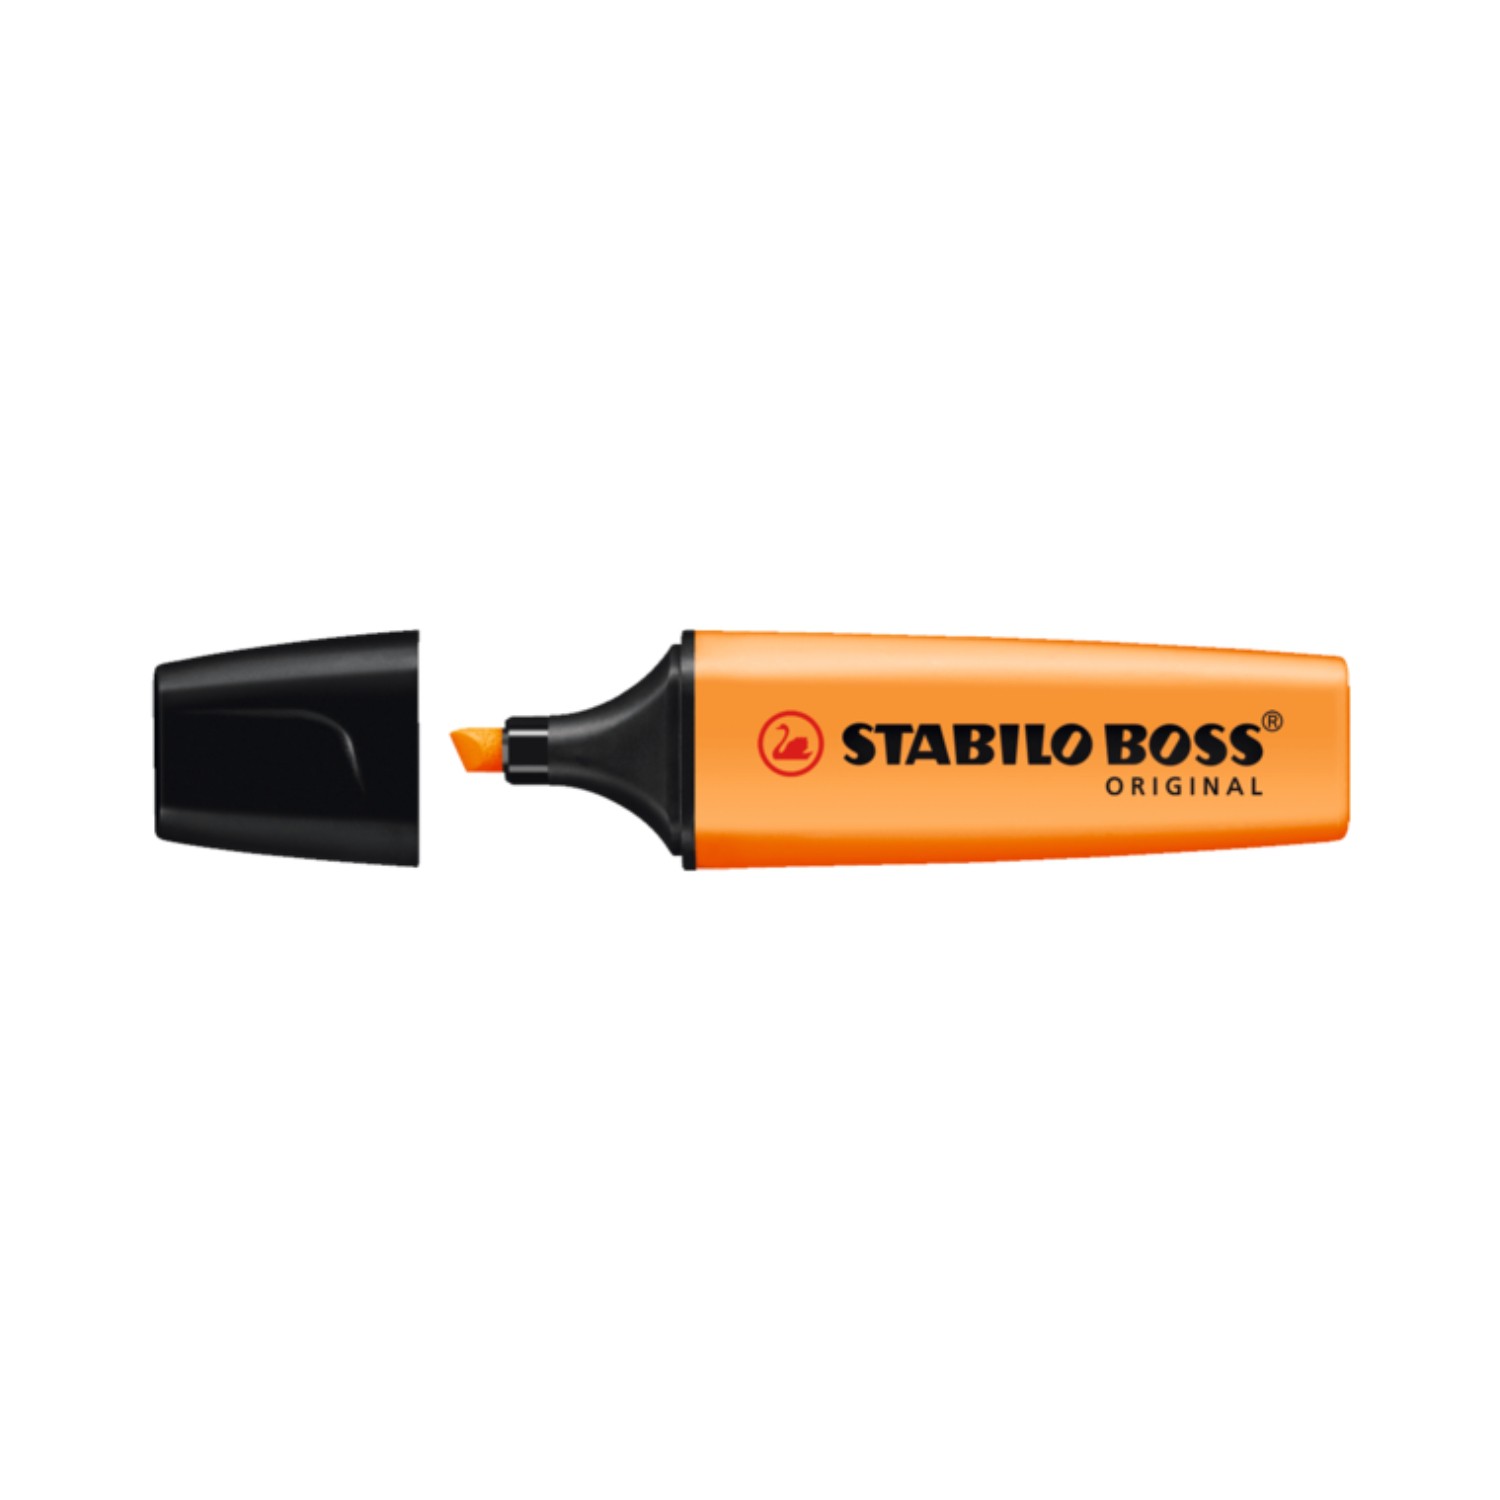 Stabilo+Boss+Original+Highlighter+Orange